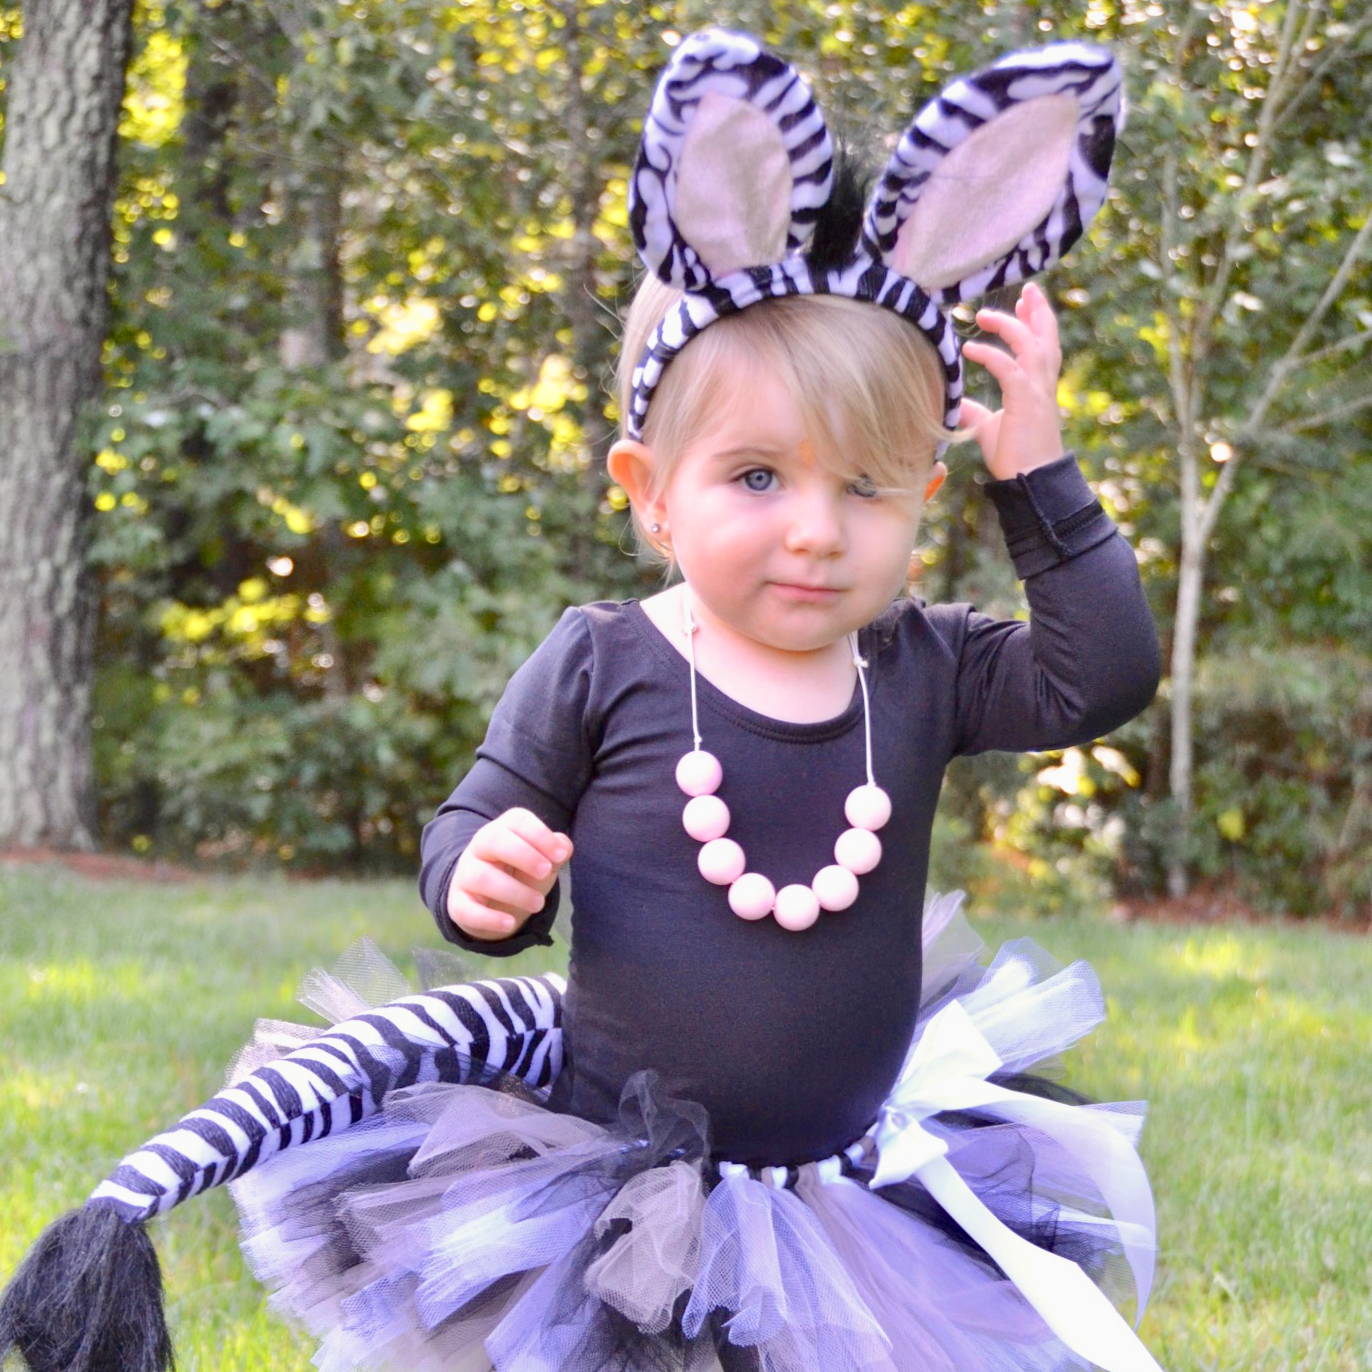 Zebra Halloween Costume for Girls in Lilac/Light Purple – Leotard Boutique